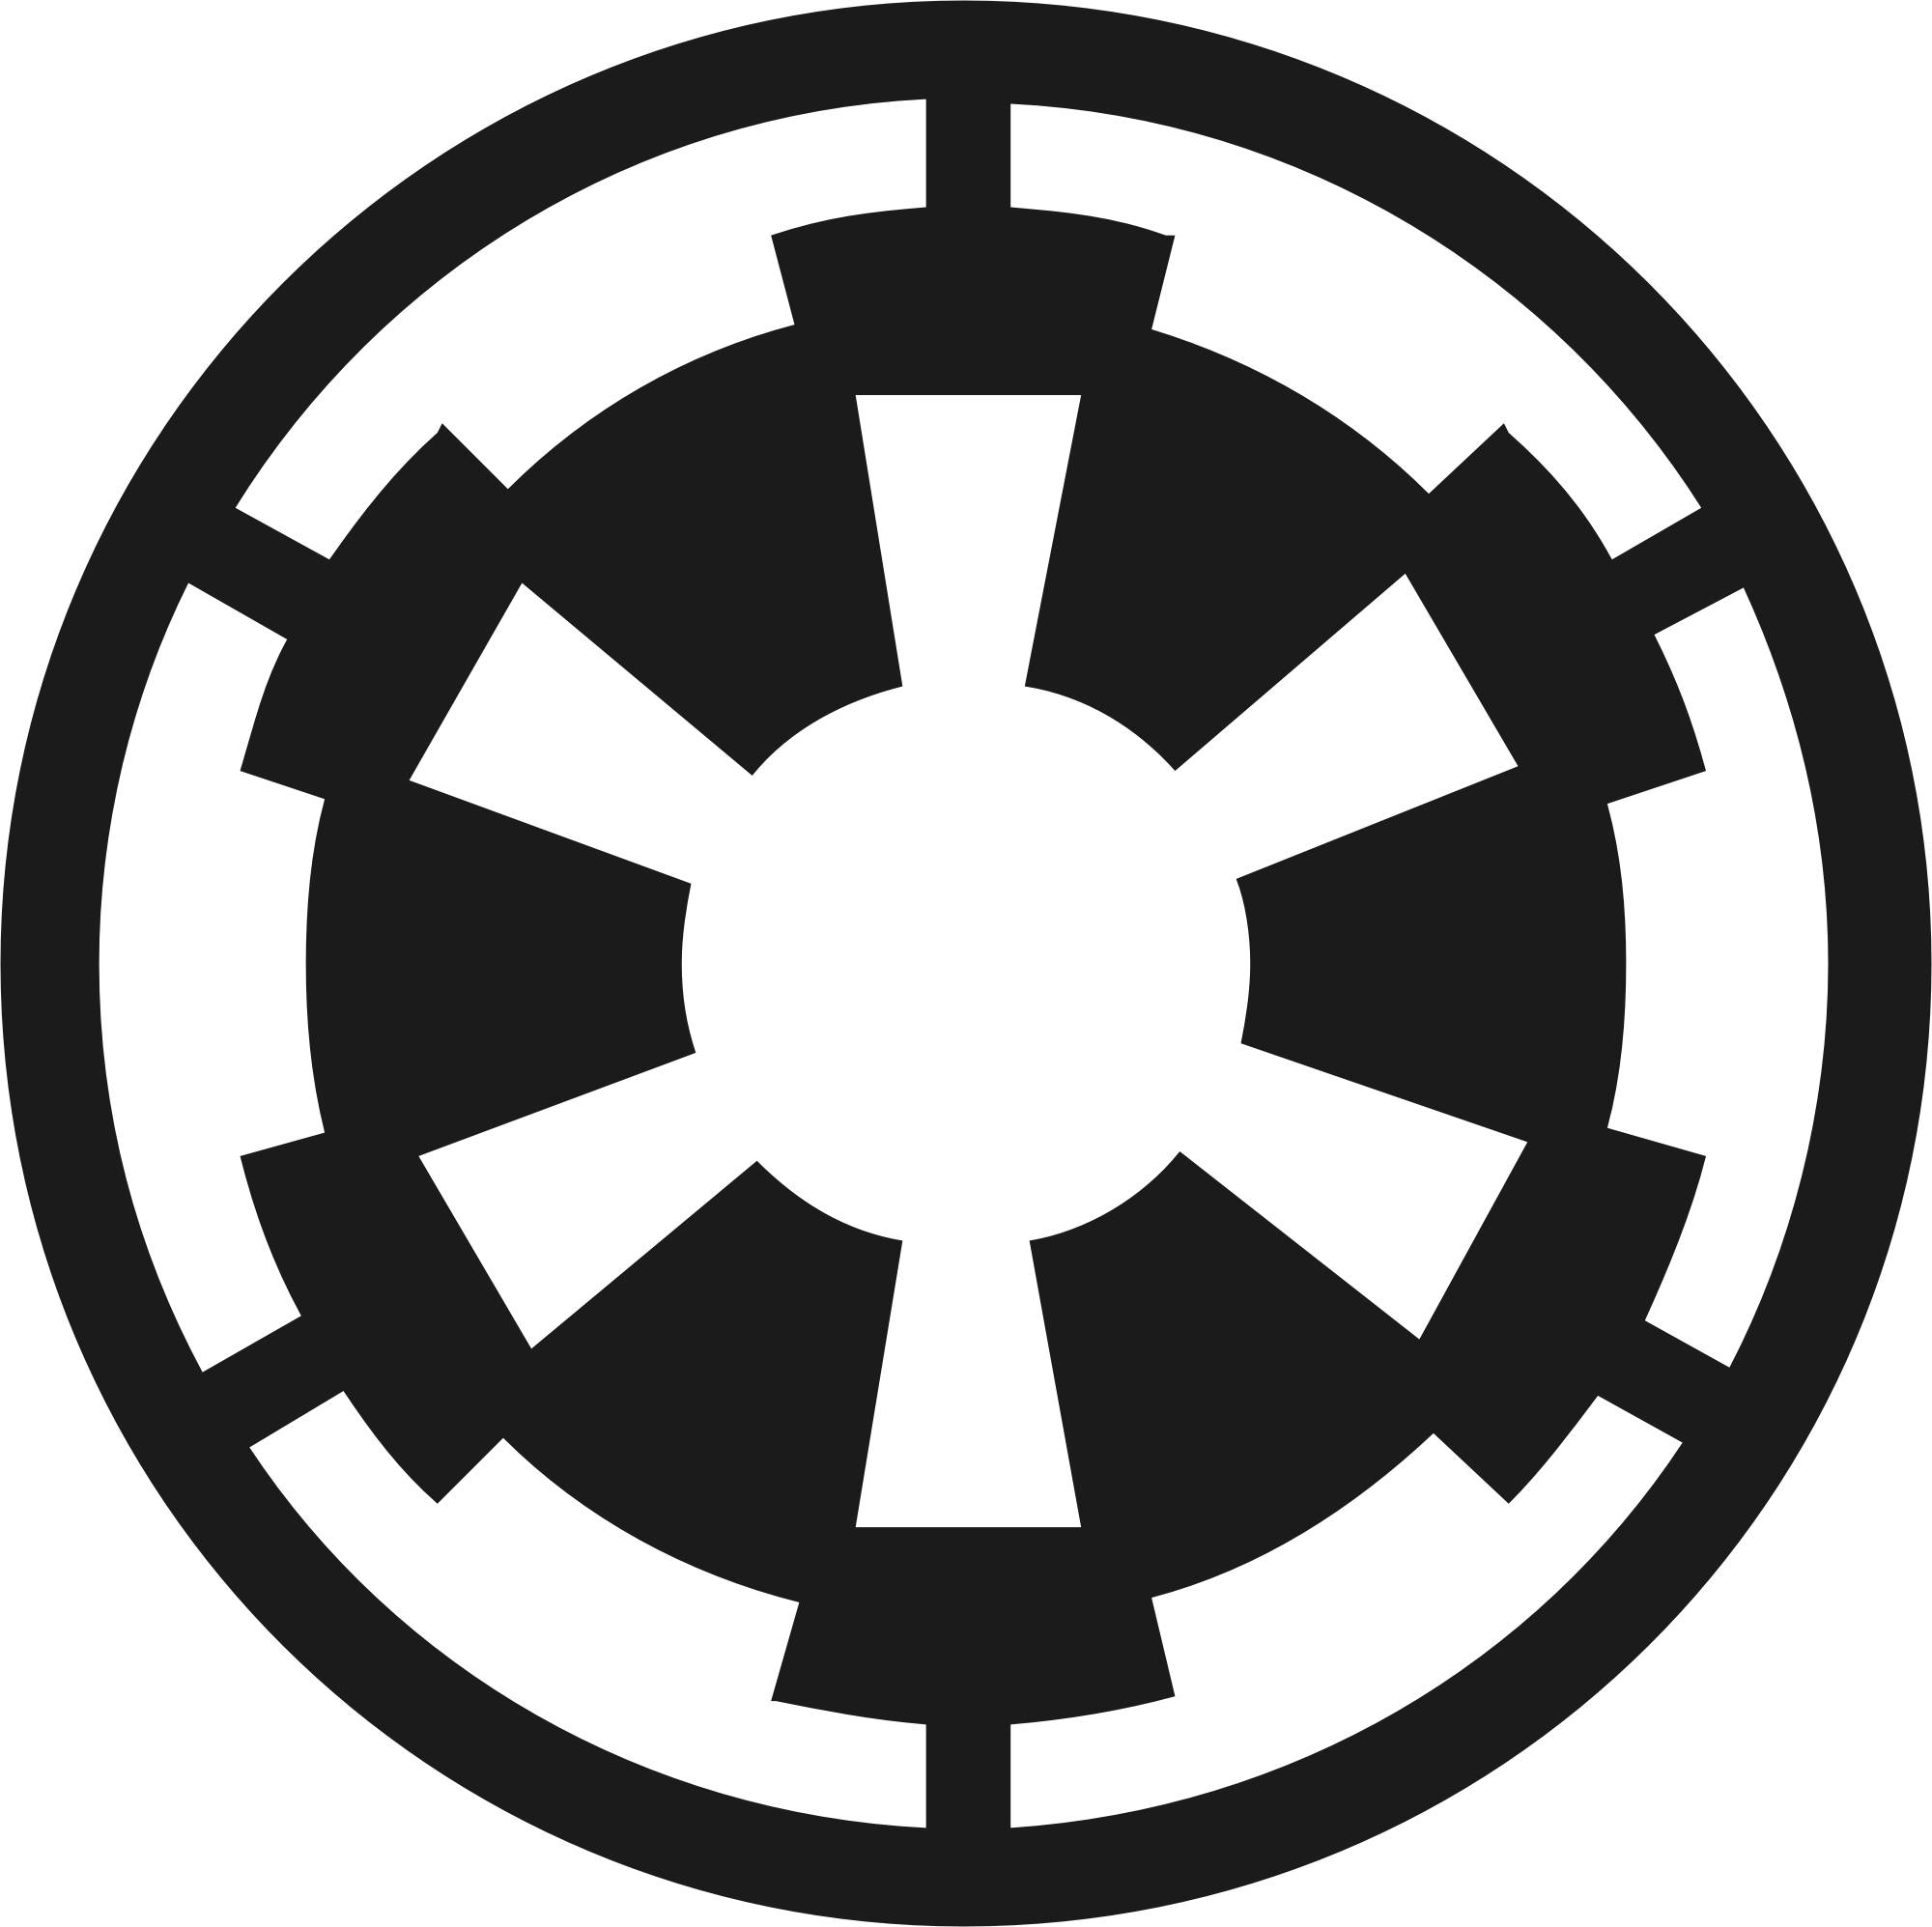 Empire Logo - Symbols in the Star Wars Universe